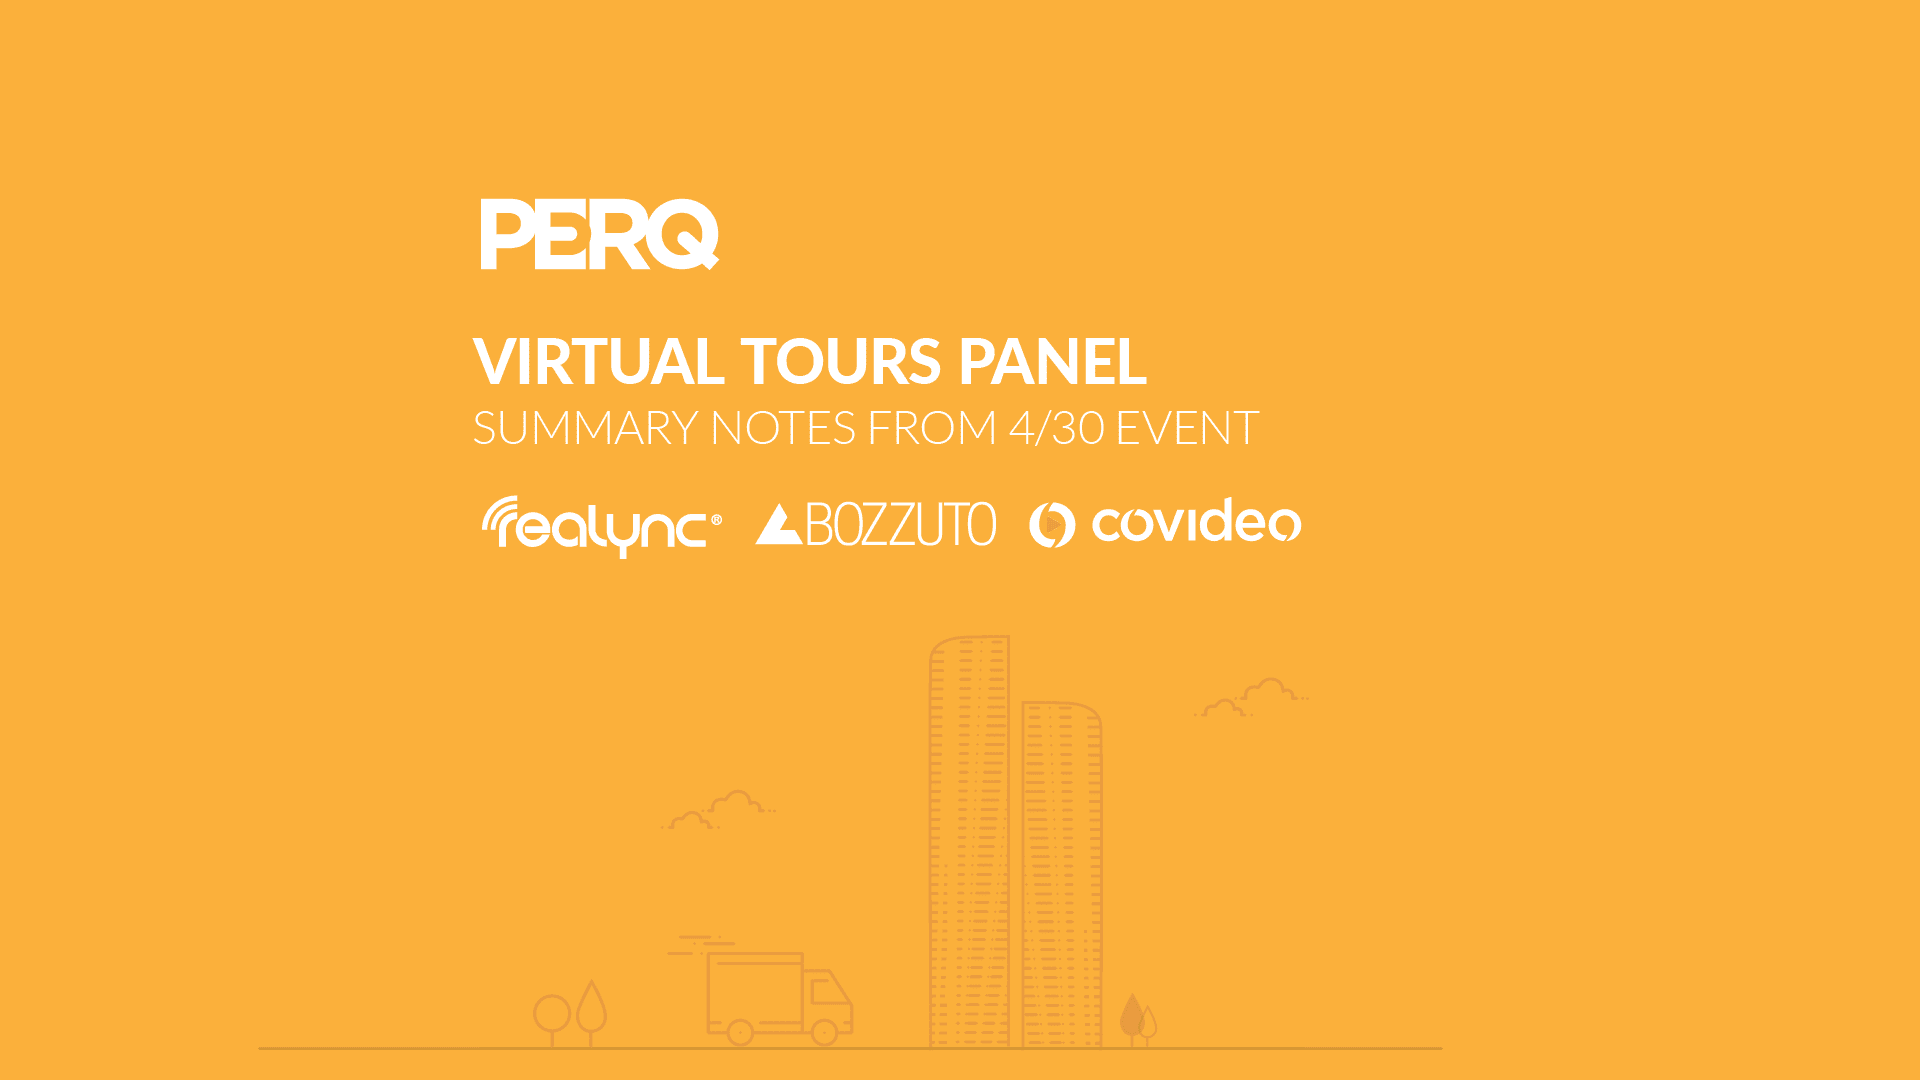 PERQ Virtual Tours Panel